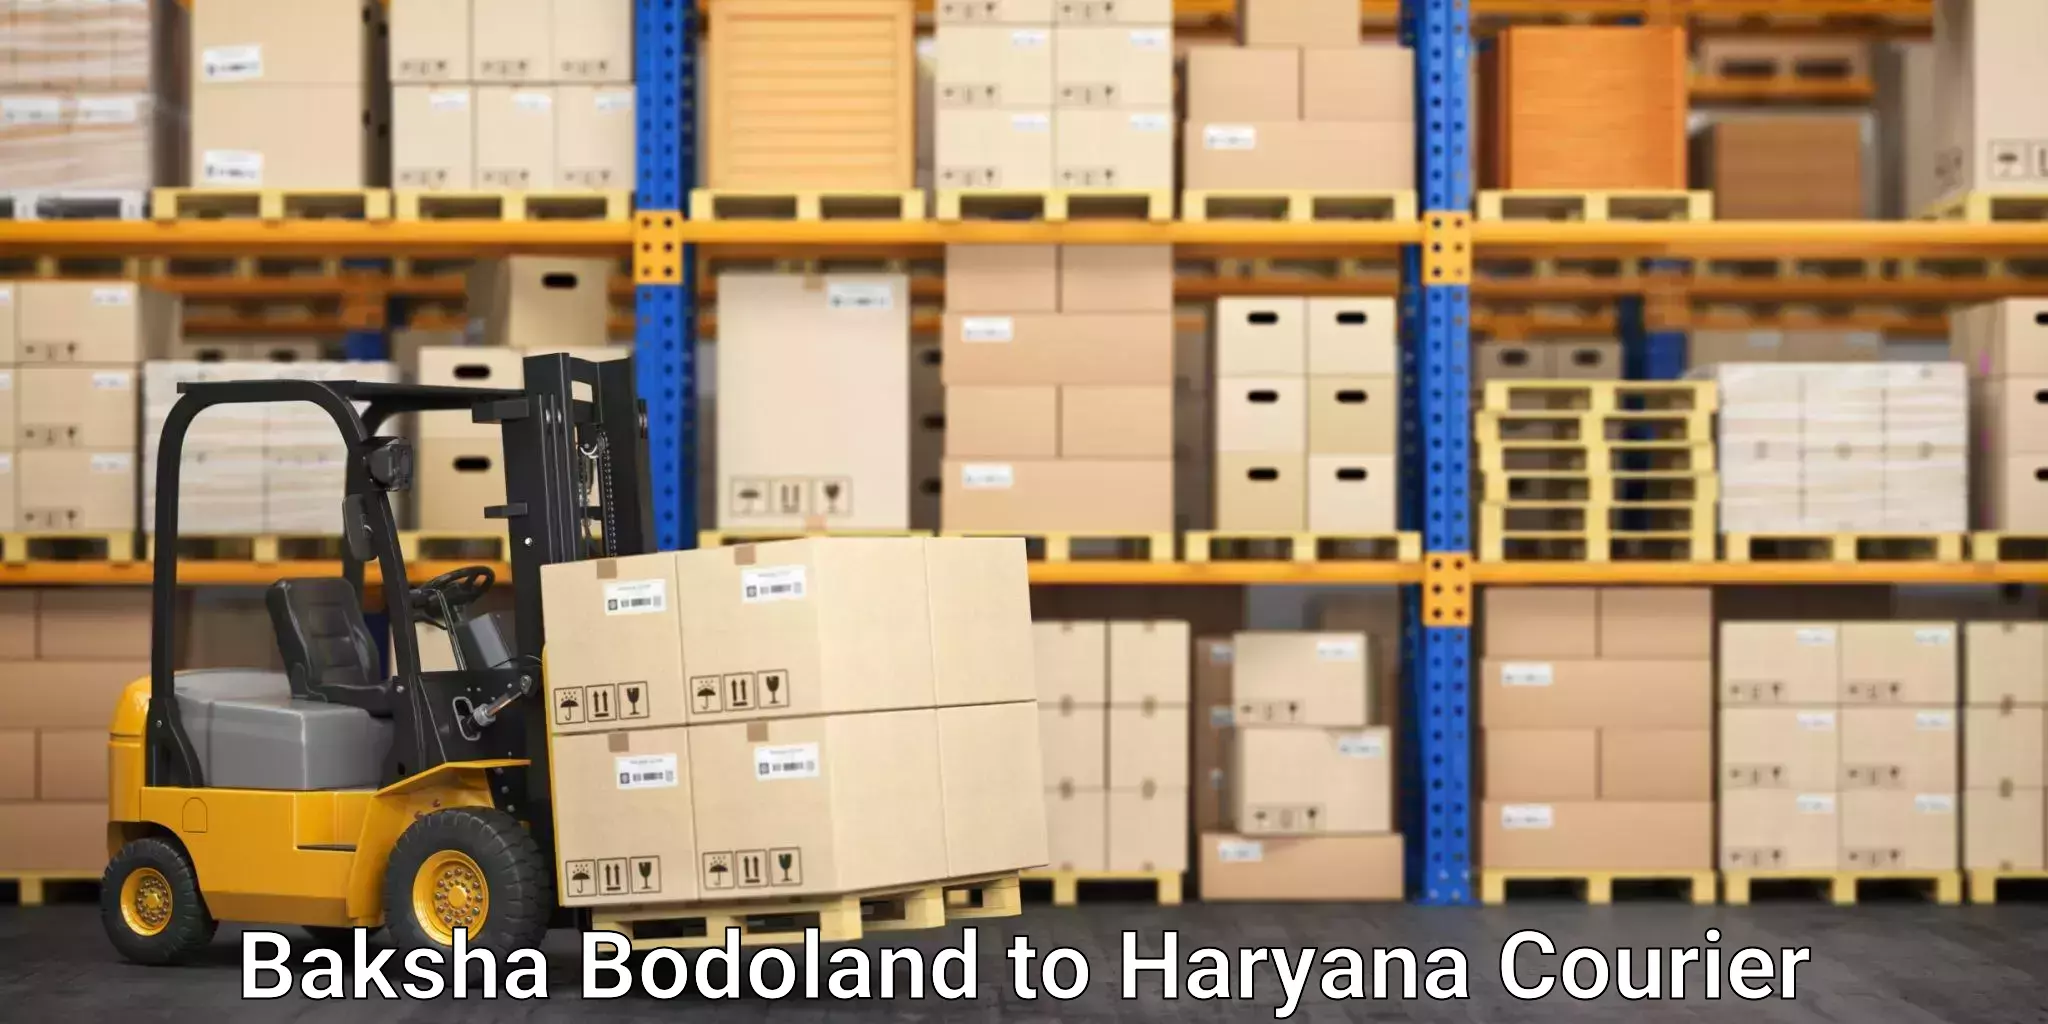 Efficient freight transportation Baksha Bodoland to Bilaspur Haryana